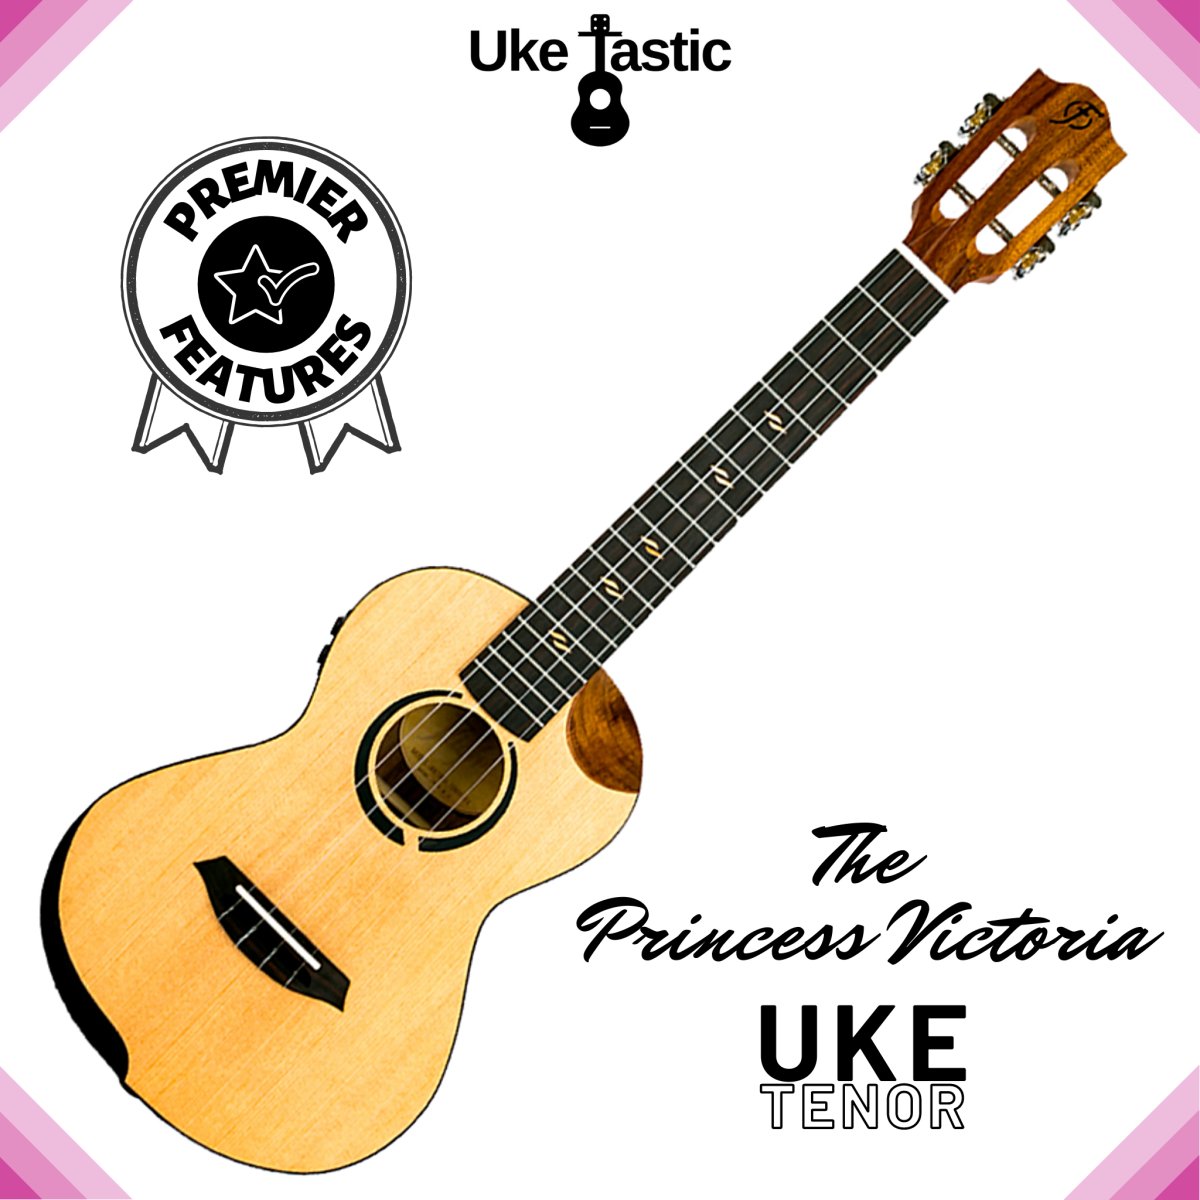 The Princess Victoria Uke SW (Concert) - Uke Tastic